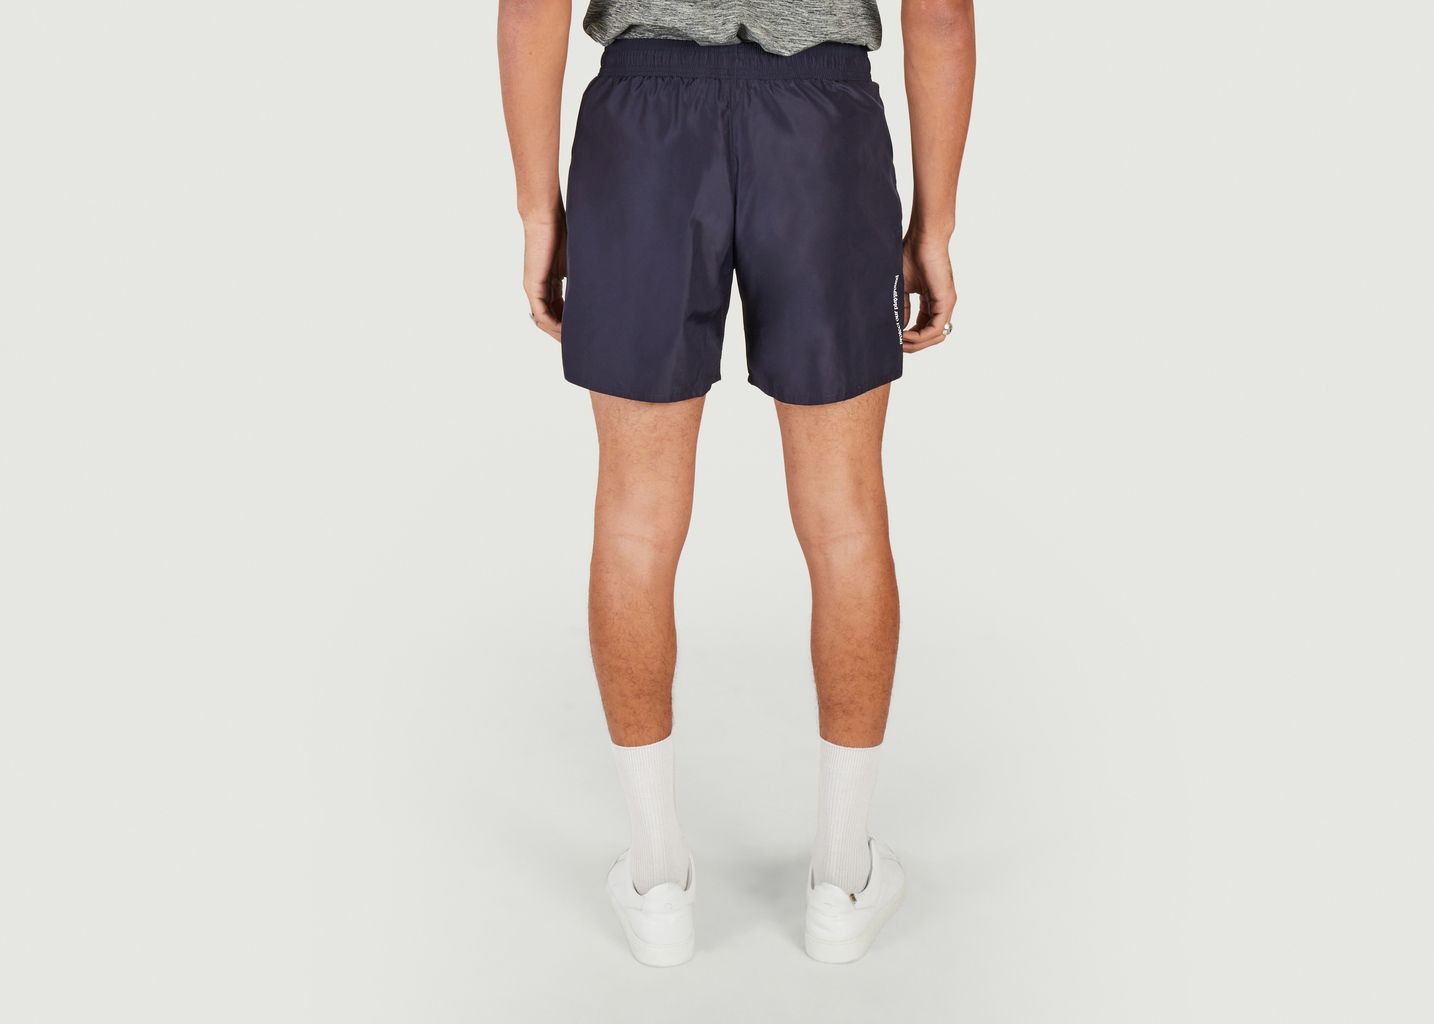 Absolute Shorts - Circle Sportswear